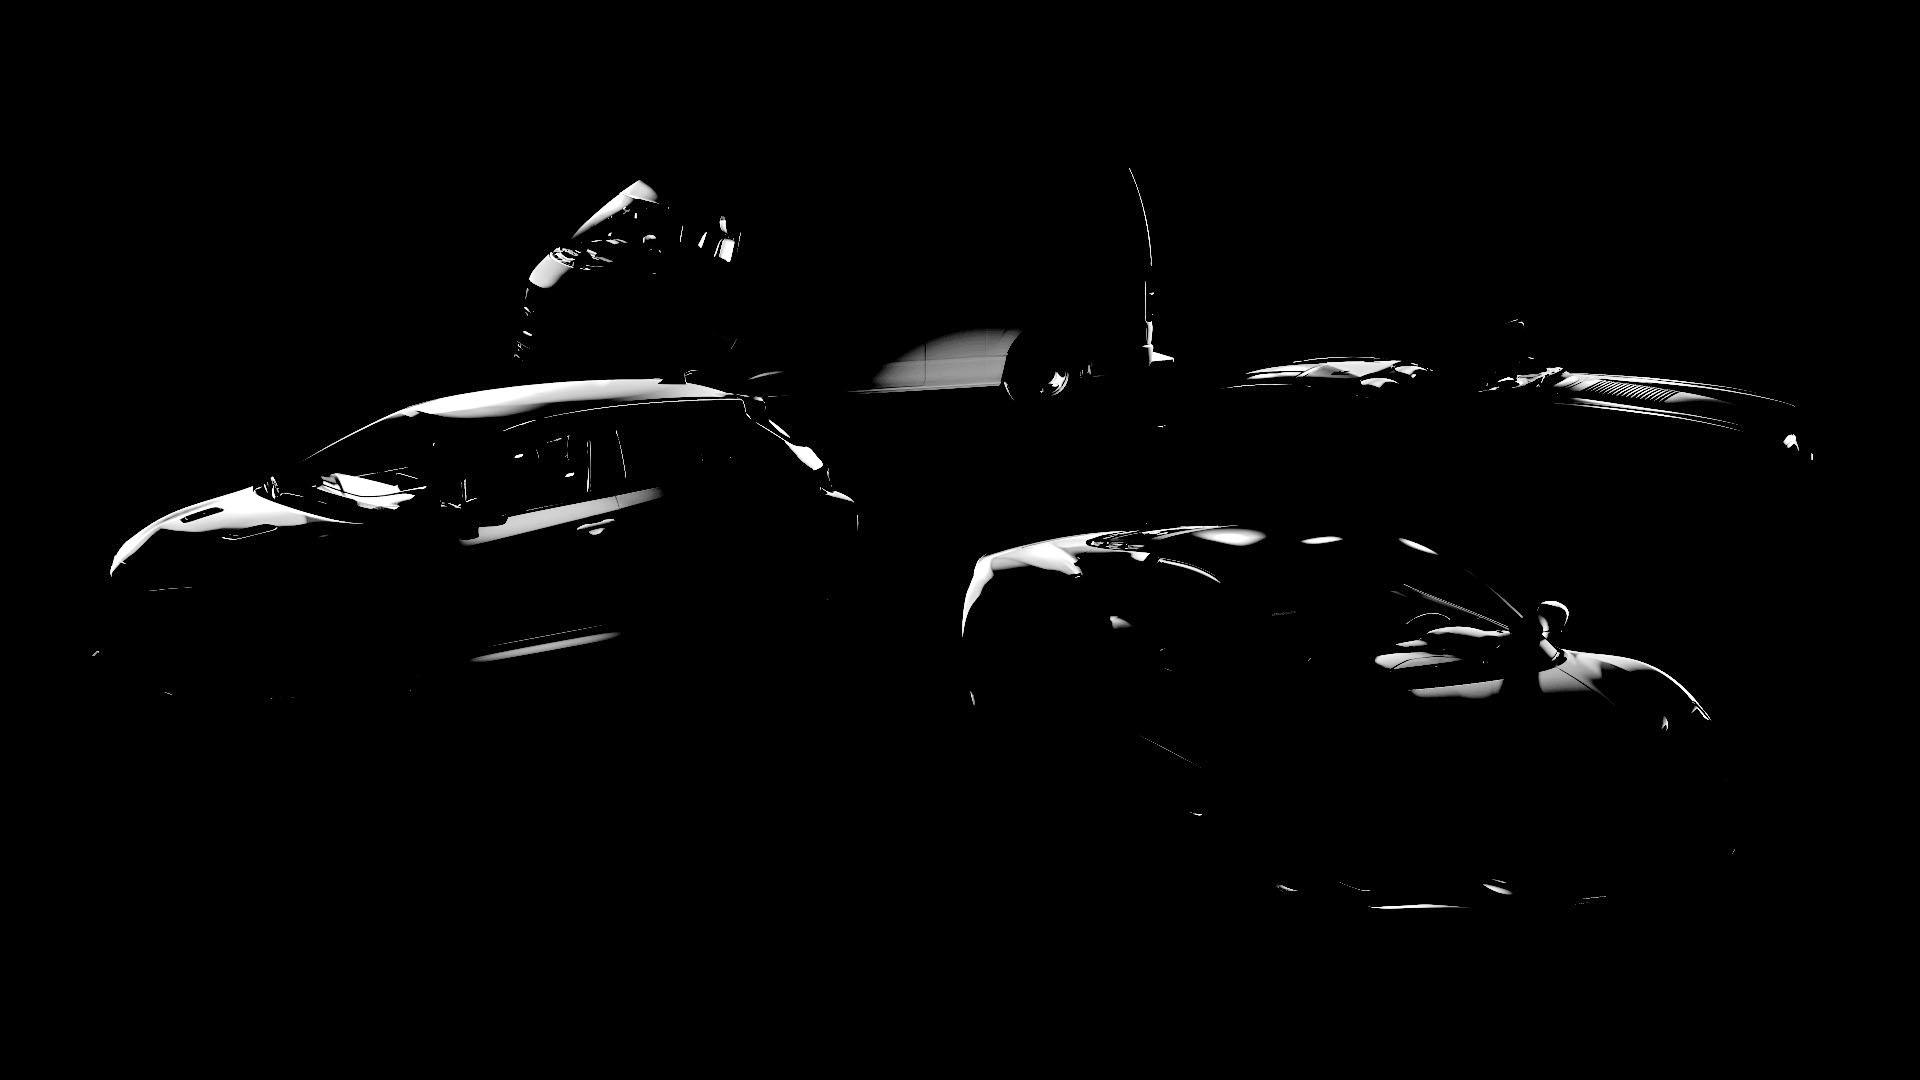 Gran Turismo 7 Update Next Week Will Add 3 New Cars - PlayStation